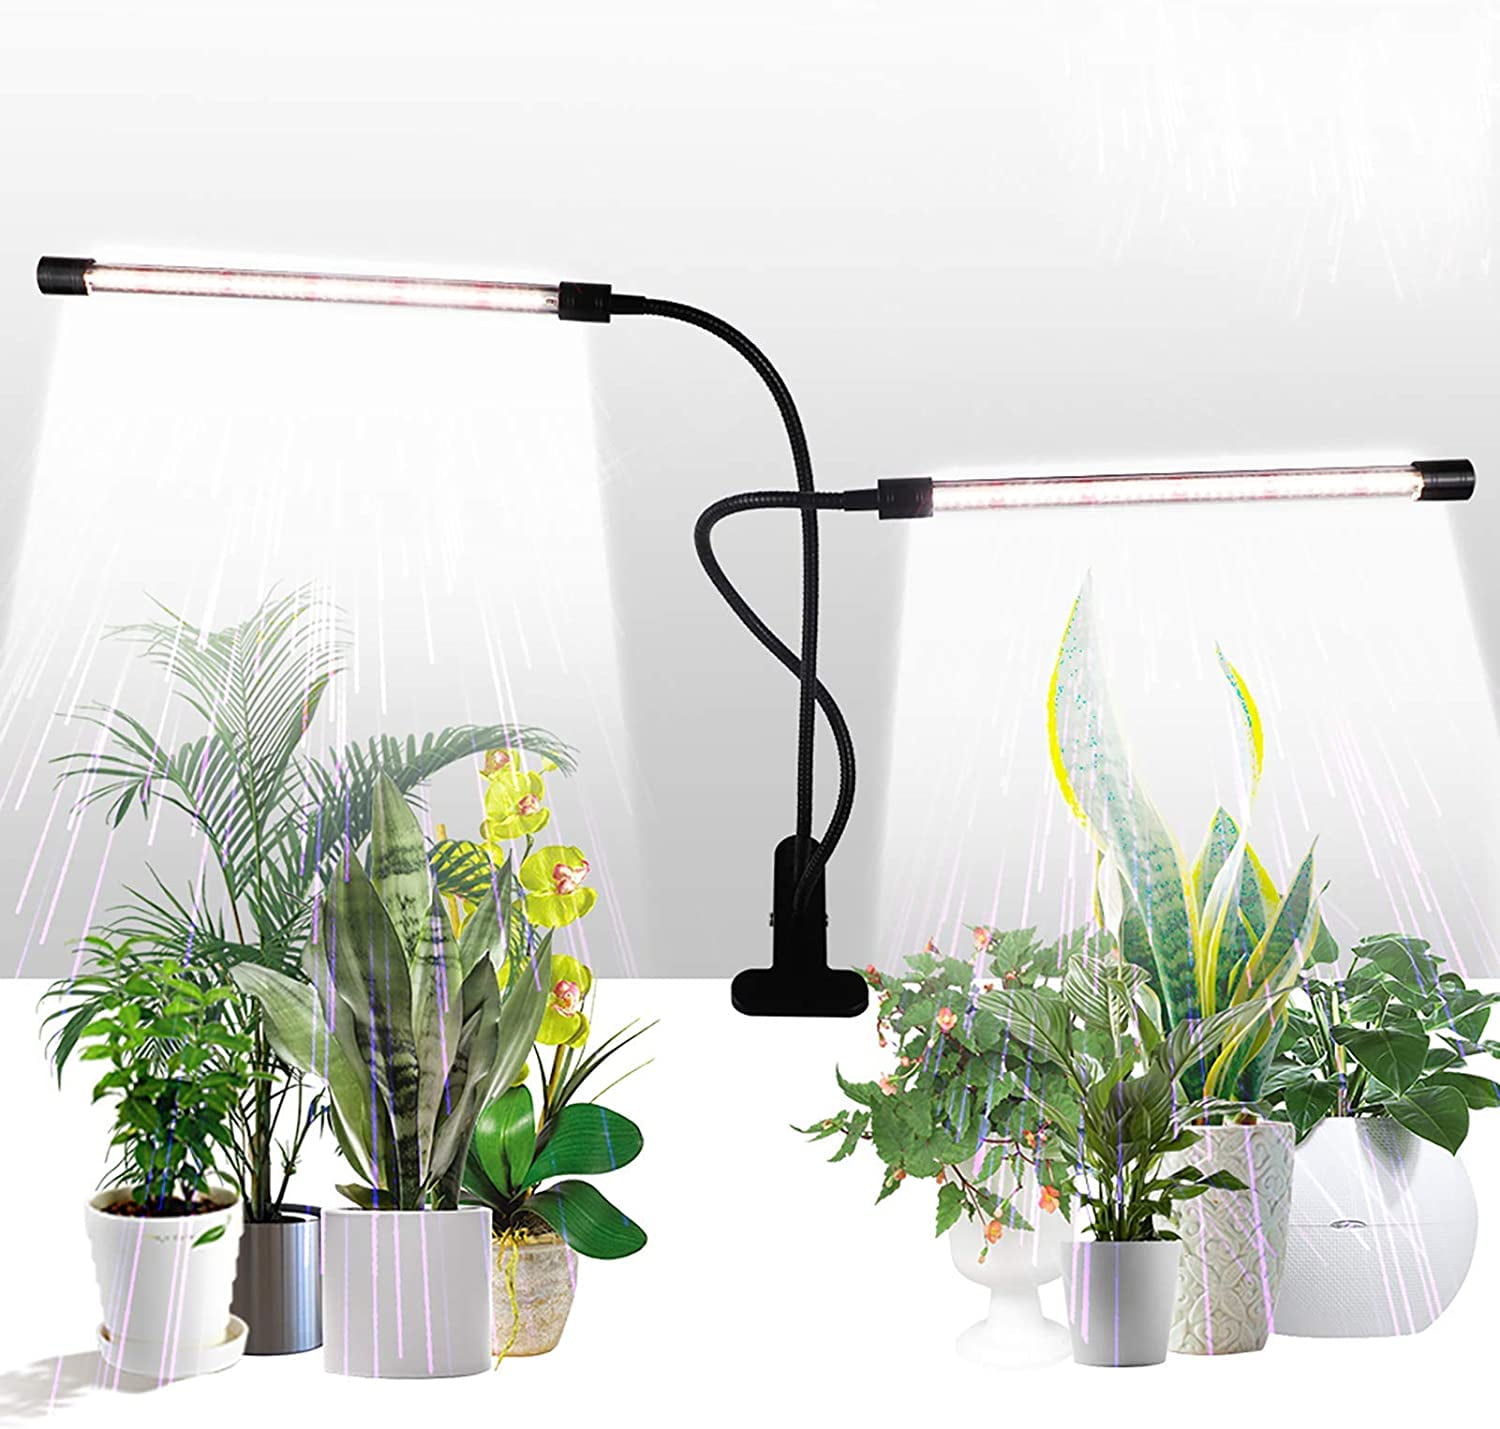 Luz de interior para cultivar plantas.